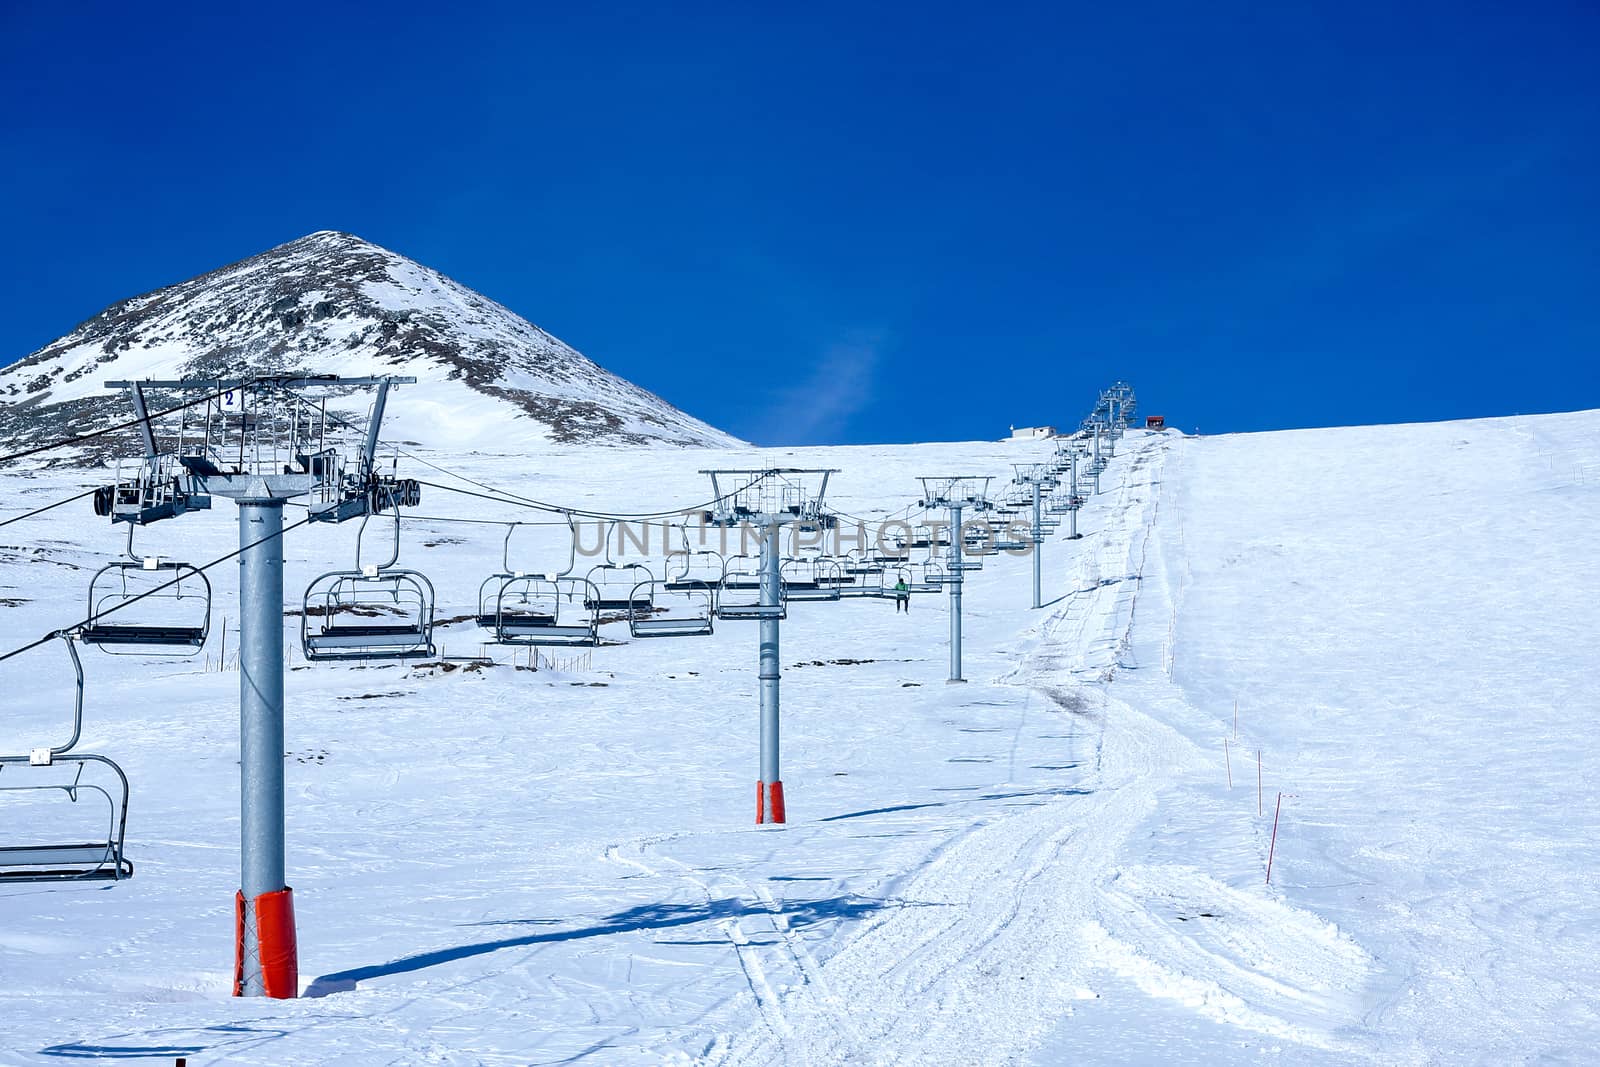 A transportation ski lift line uphill and downhill on a ski resort slope